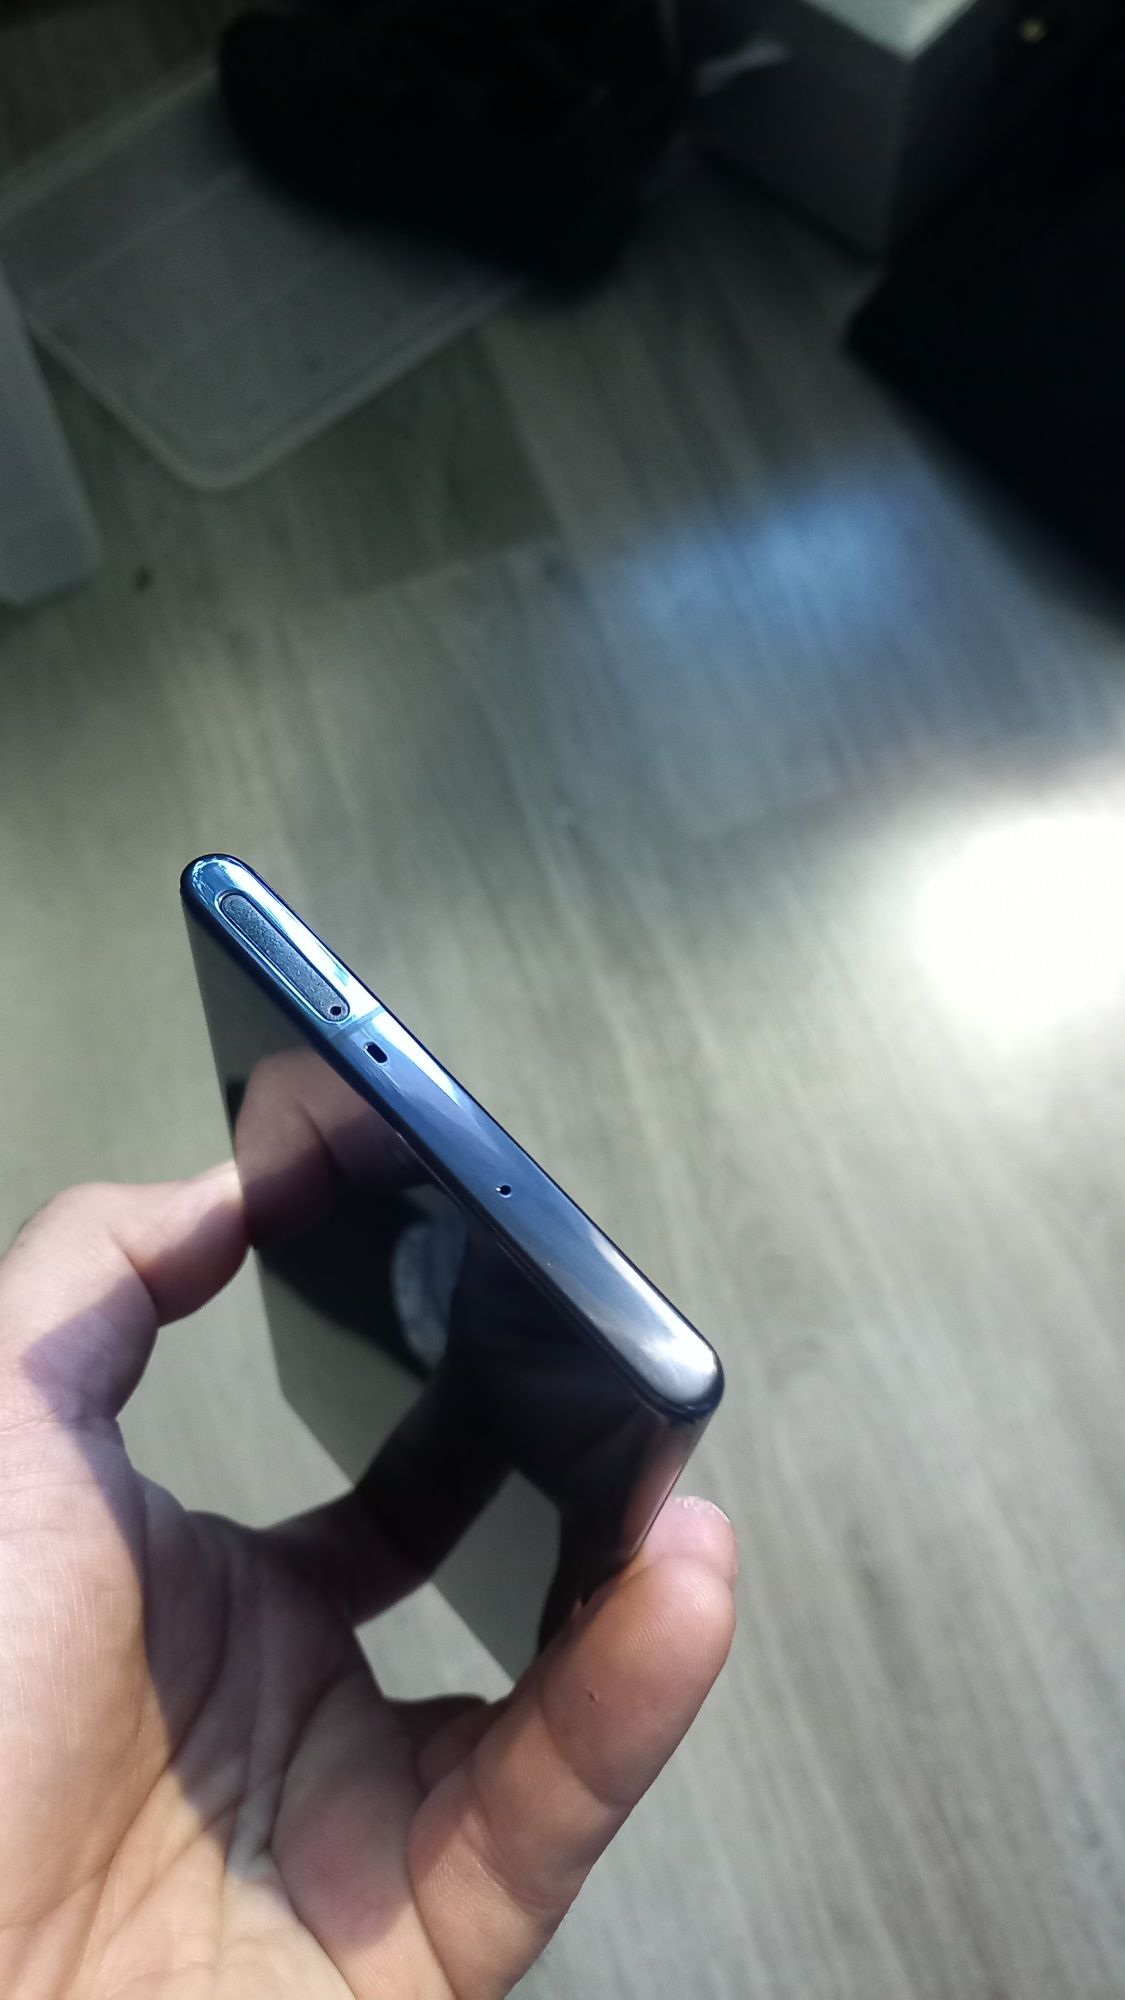 Samsung Galaxy Note 10 + Plus